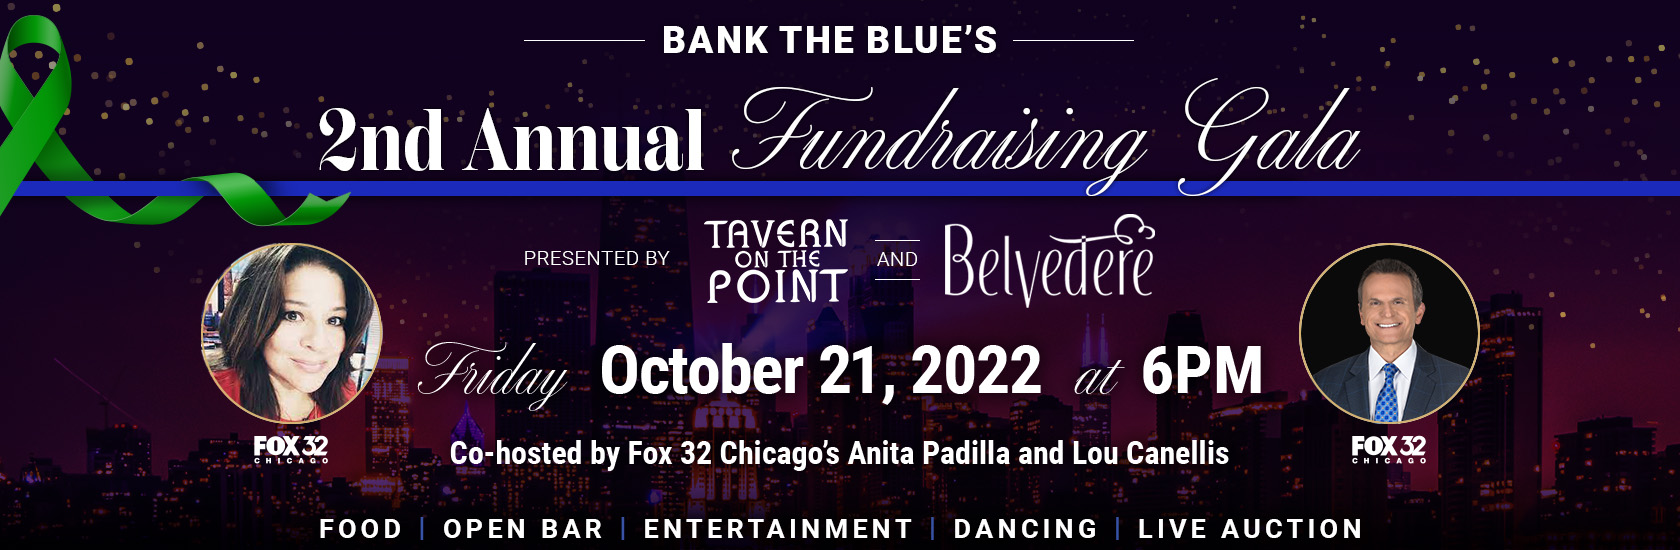 BTB Gala 2022 - Bank The Blue